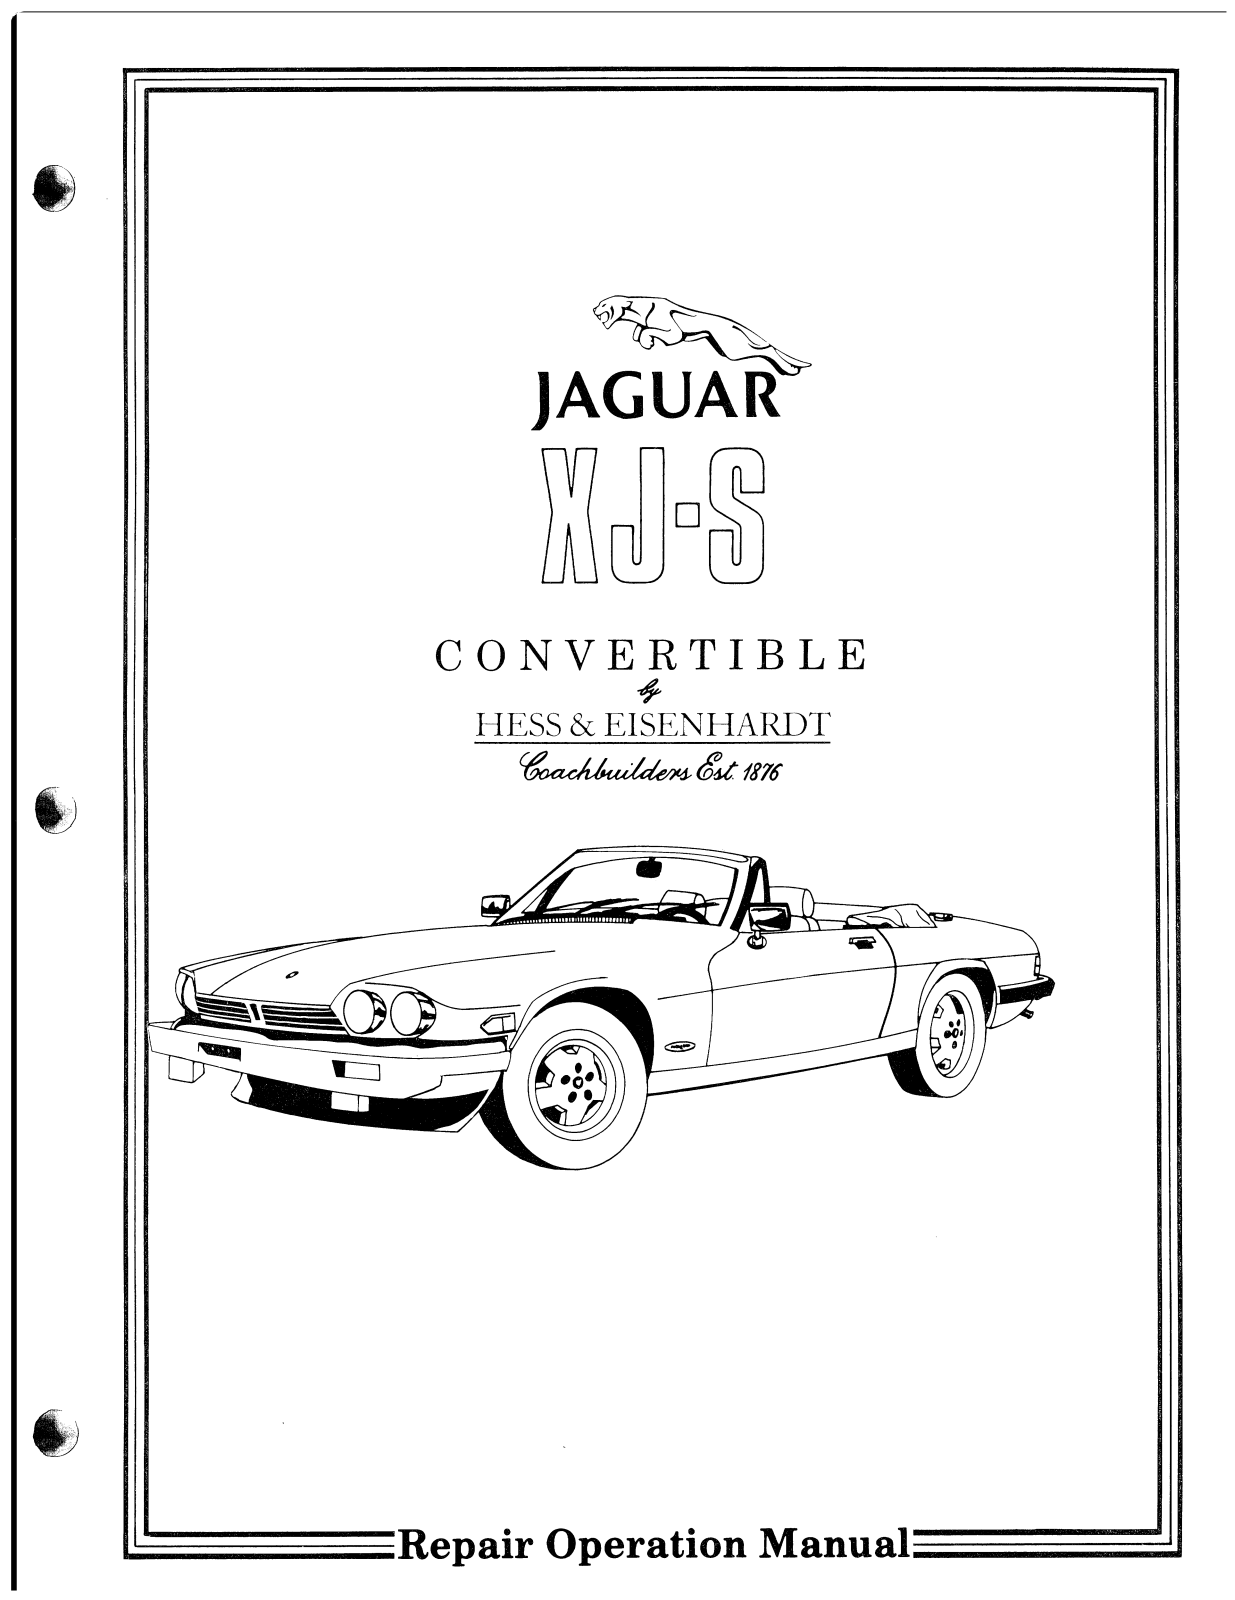 Jaguar XJS User Manual